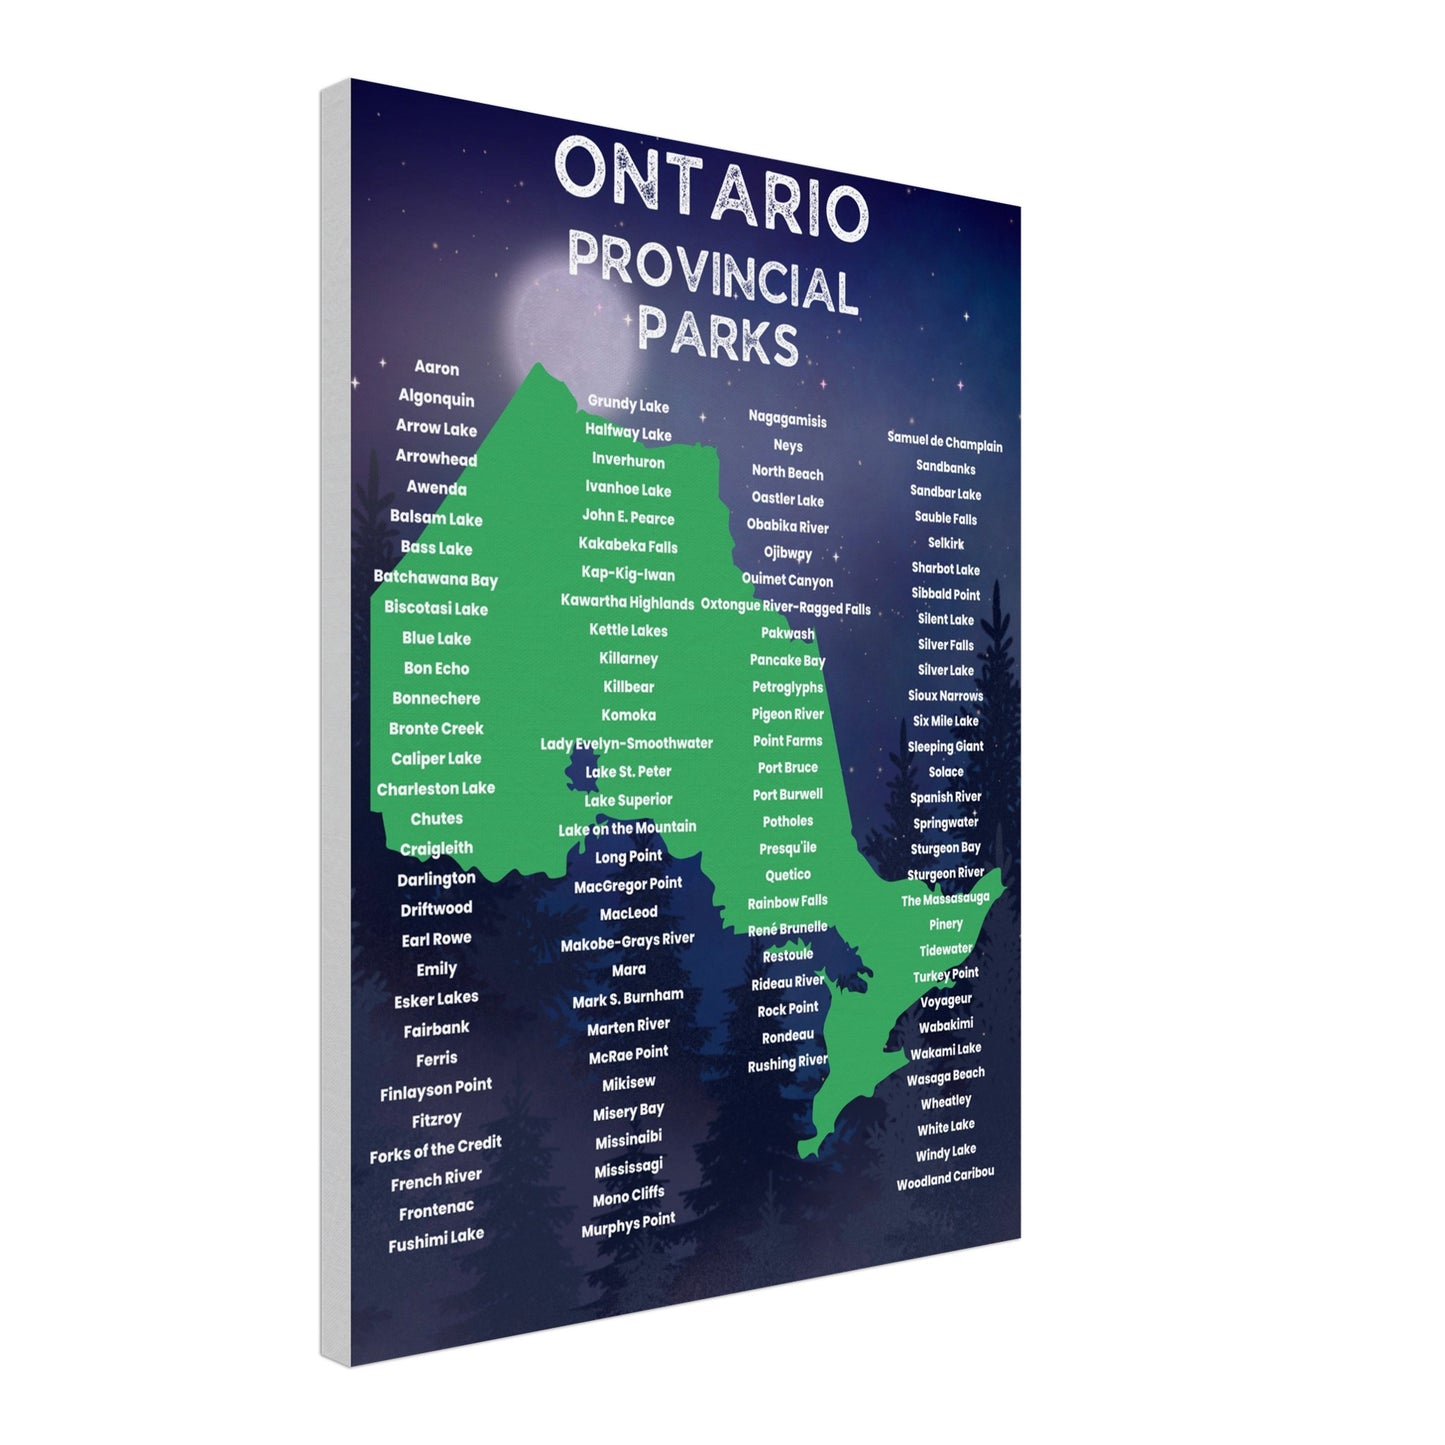 Ontario Provincial Parks - List Of All Provincial Parks